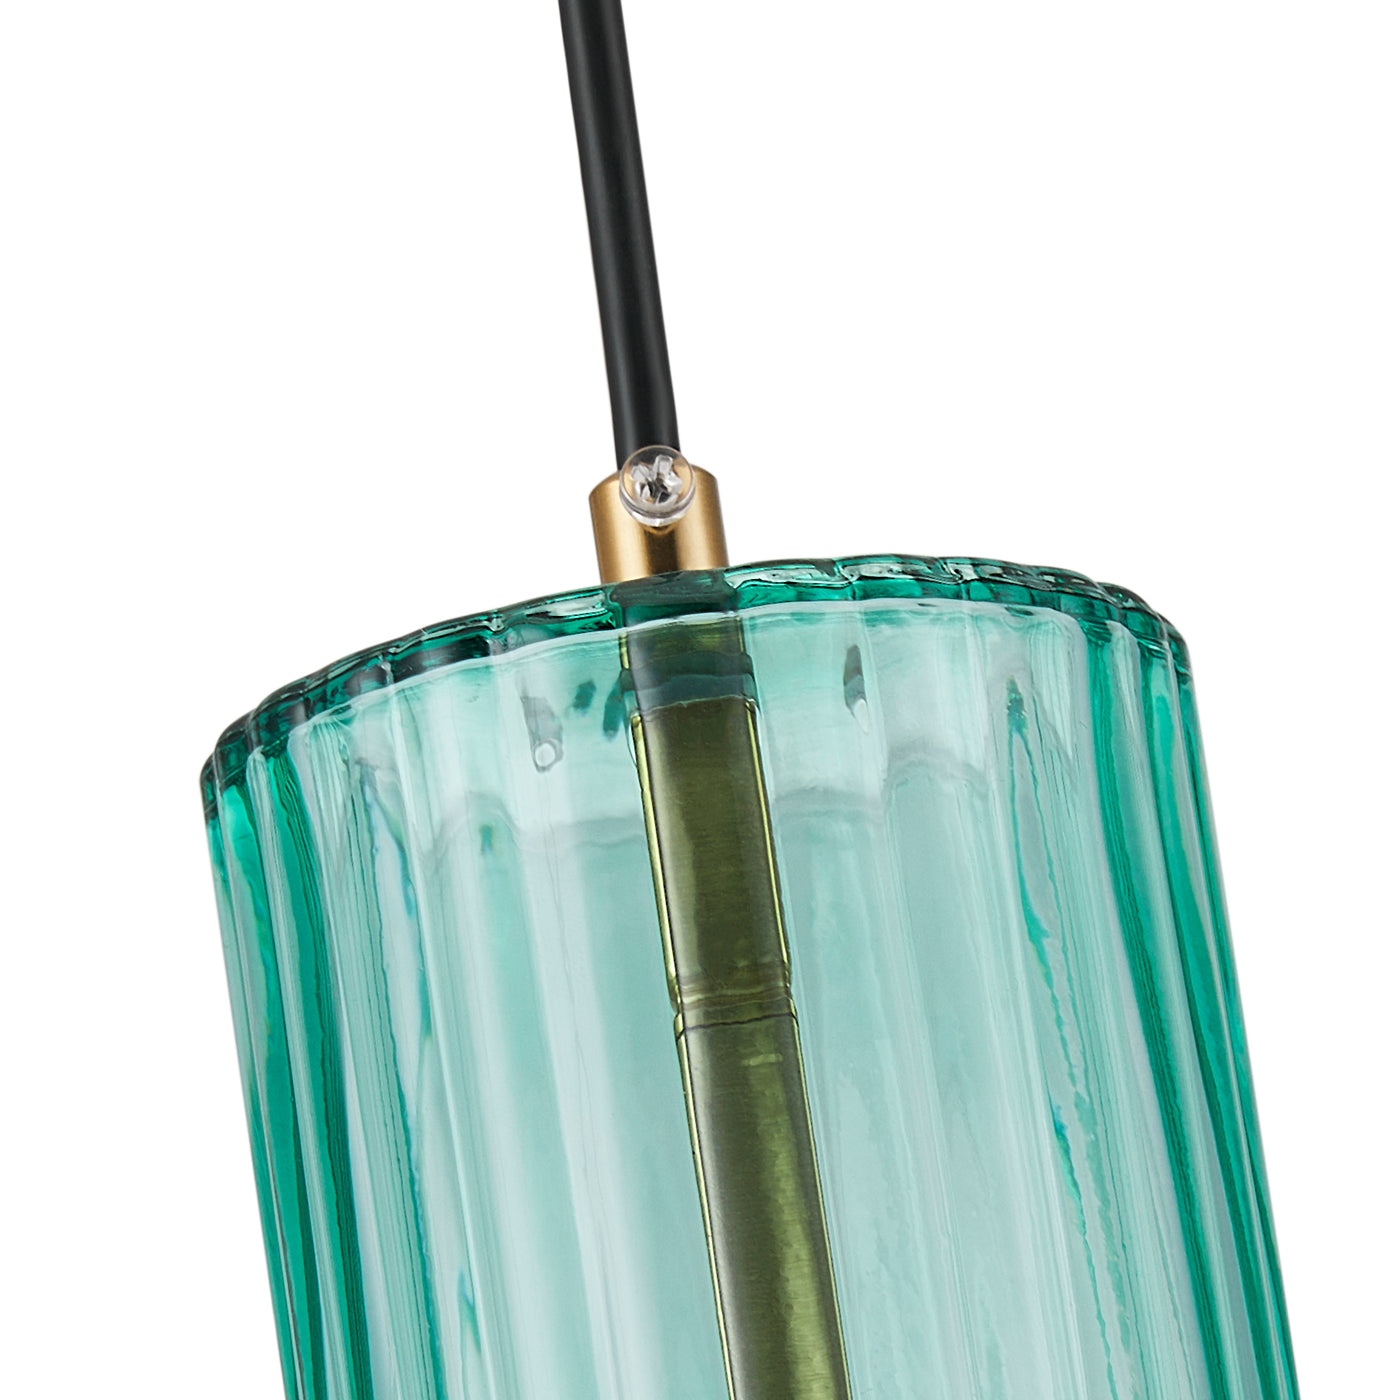 1-Light Cylinder Glass Shade Pendant Lighting